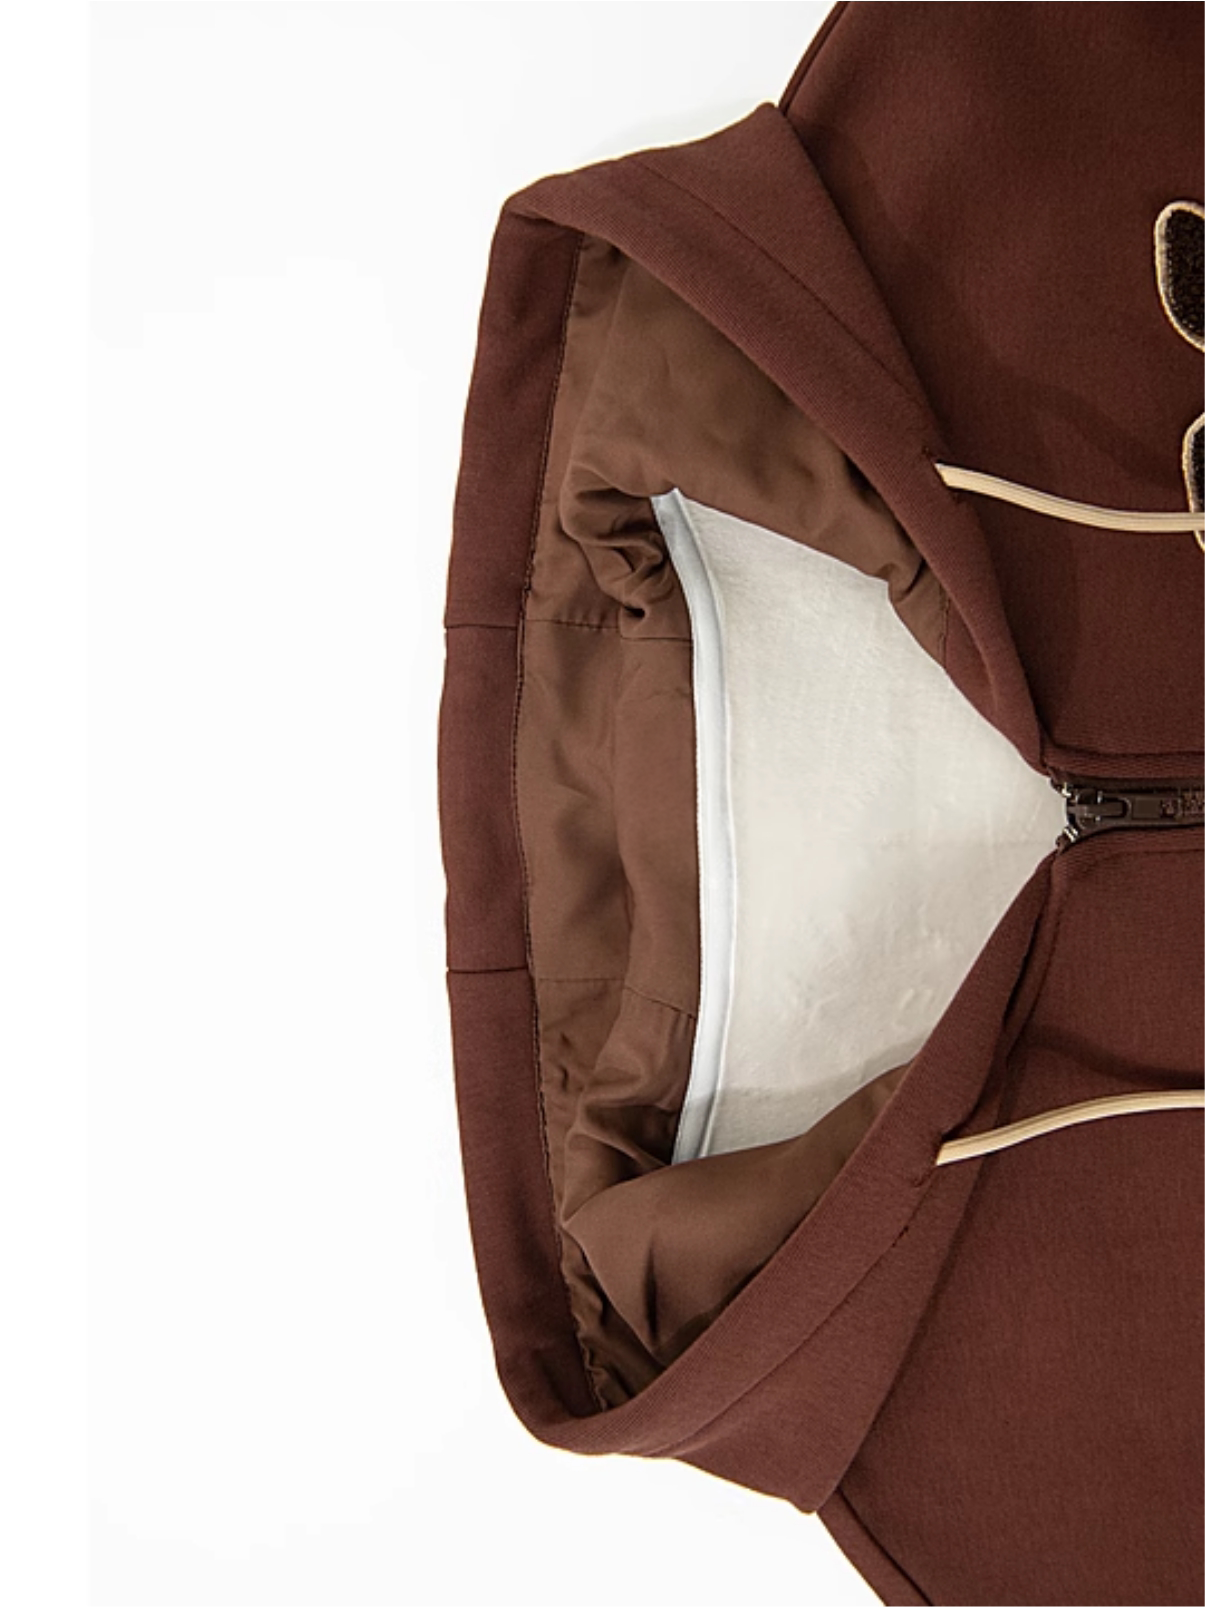 Maillard wears vintage brown sweatshirt jacket casual hooded top preppy autumn-ntbhshop